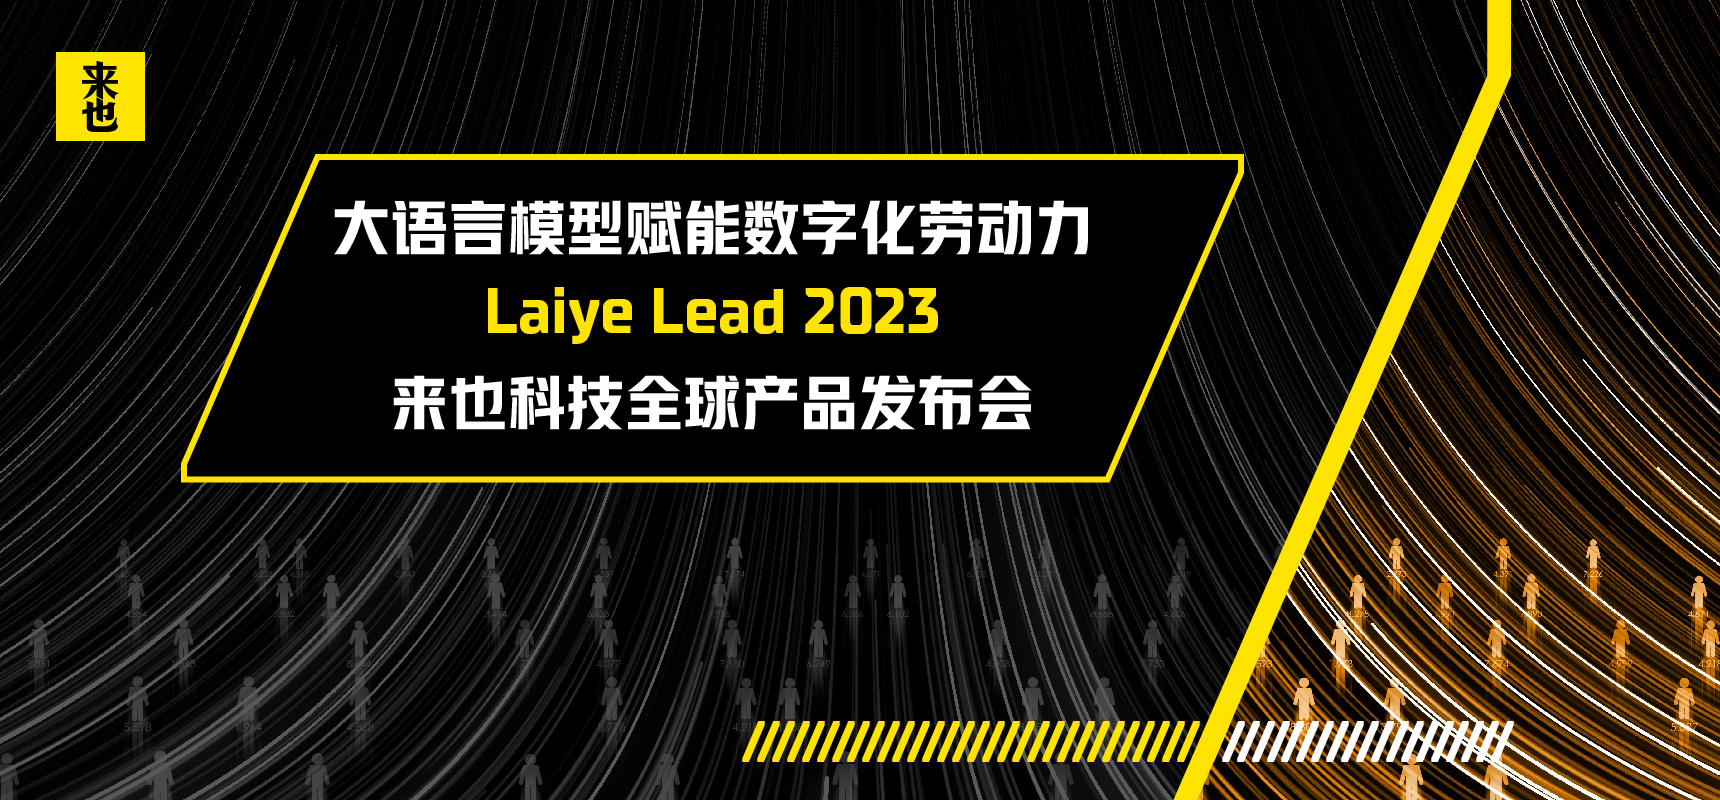 Laiye Lead 2023